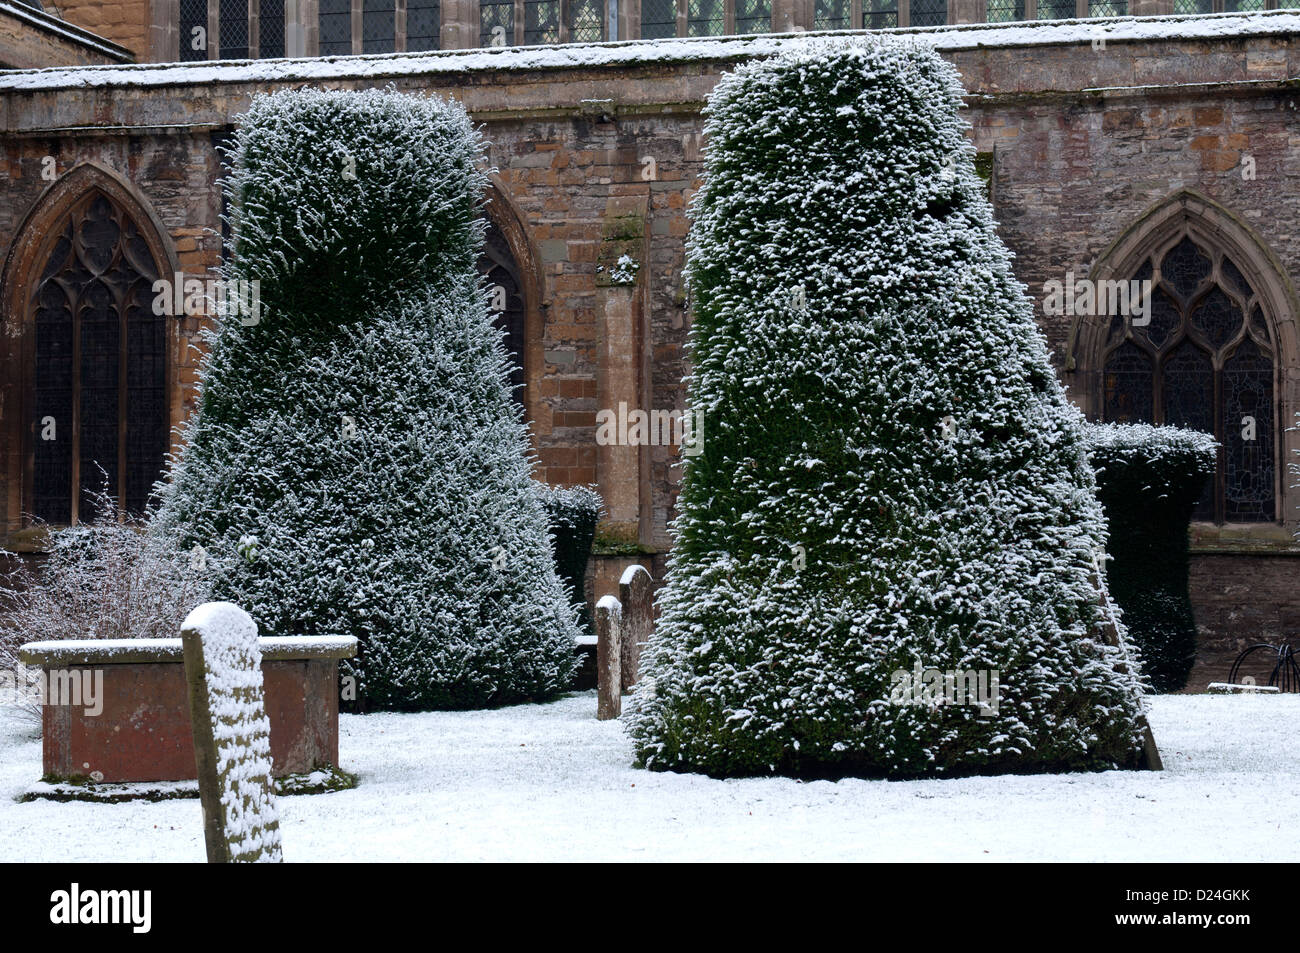 Yew trees in Holy Trinity churchyard in winter, Stratford-upon-Avon, UK Stock Photo